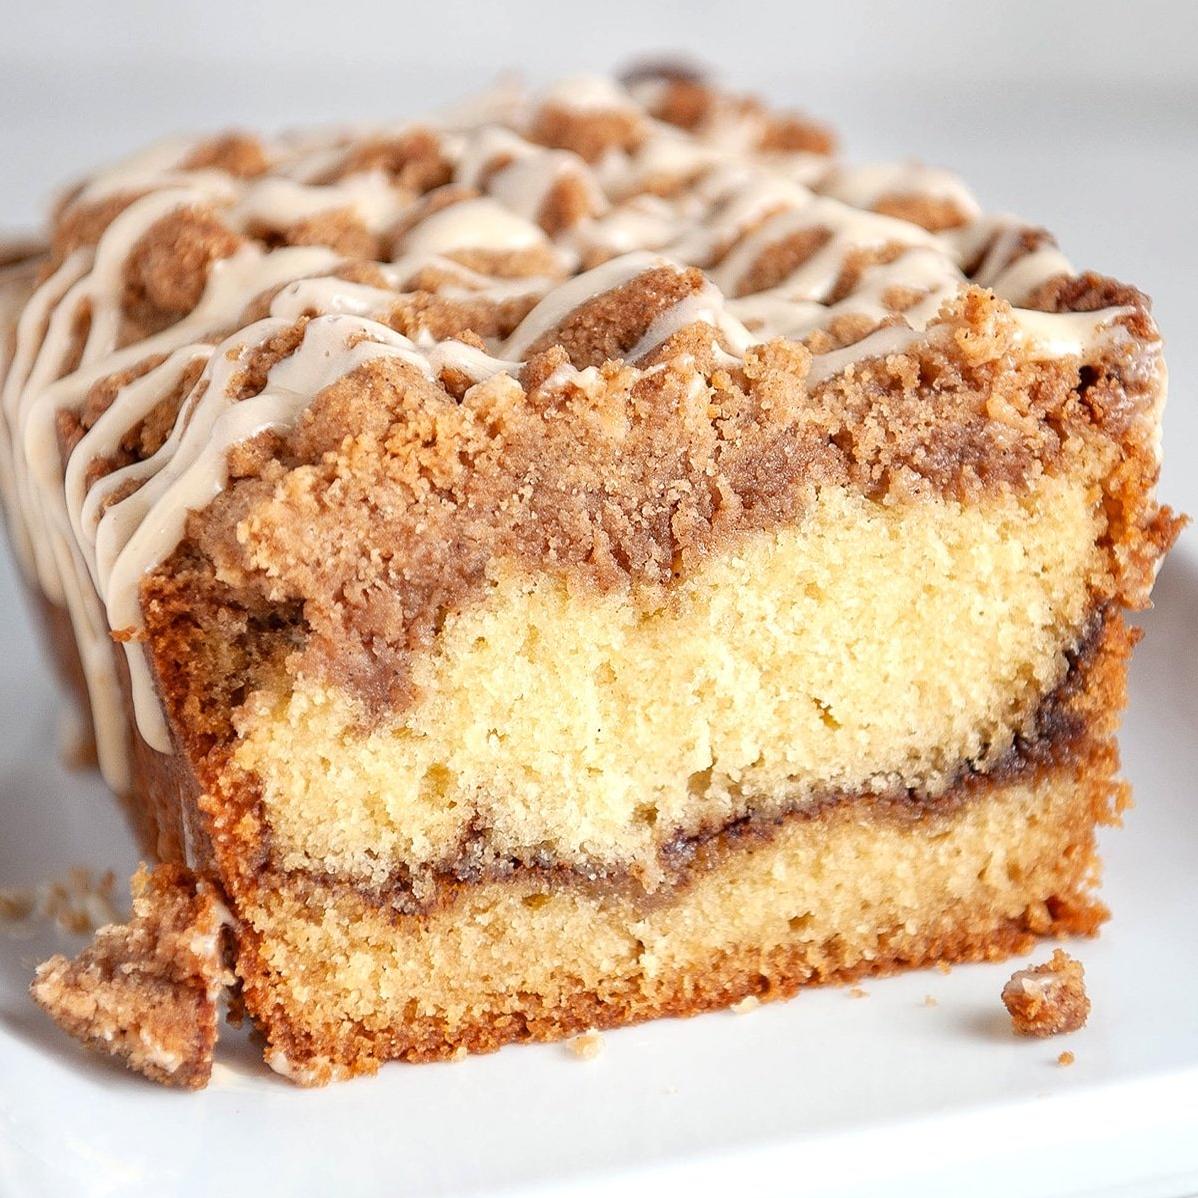 Delicious Coffee Crumb Cake Recipe – Easy & Quick!